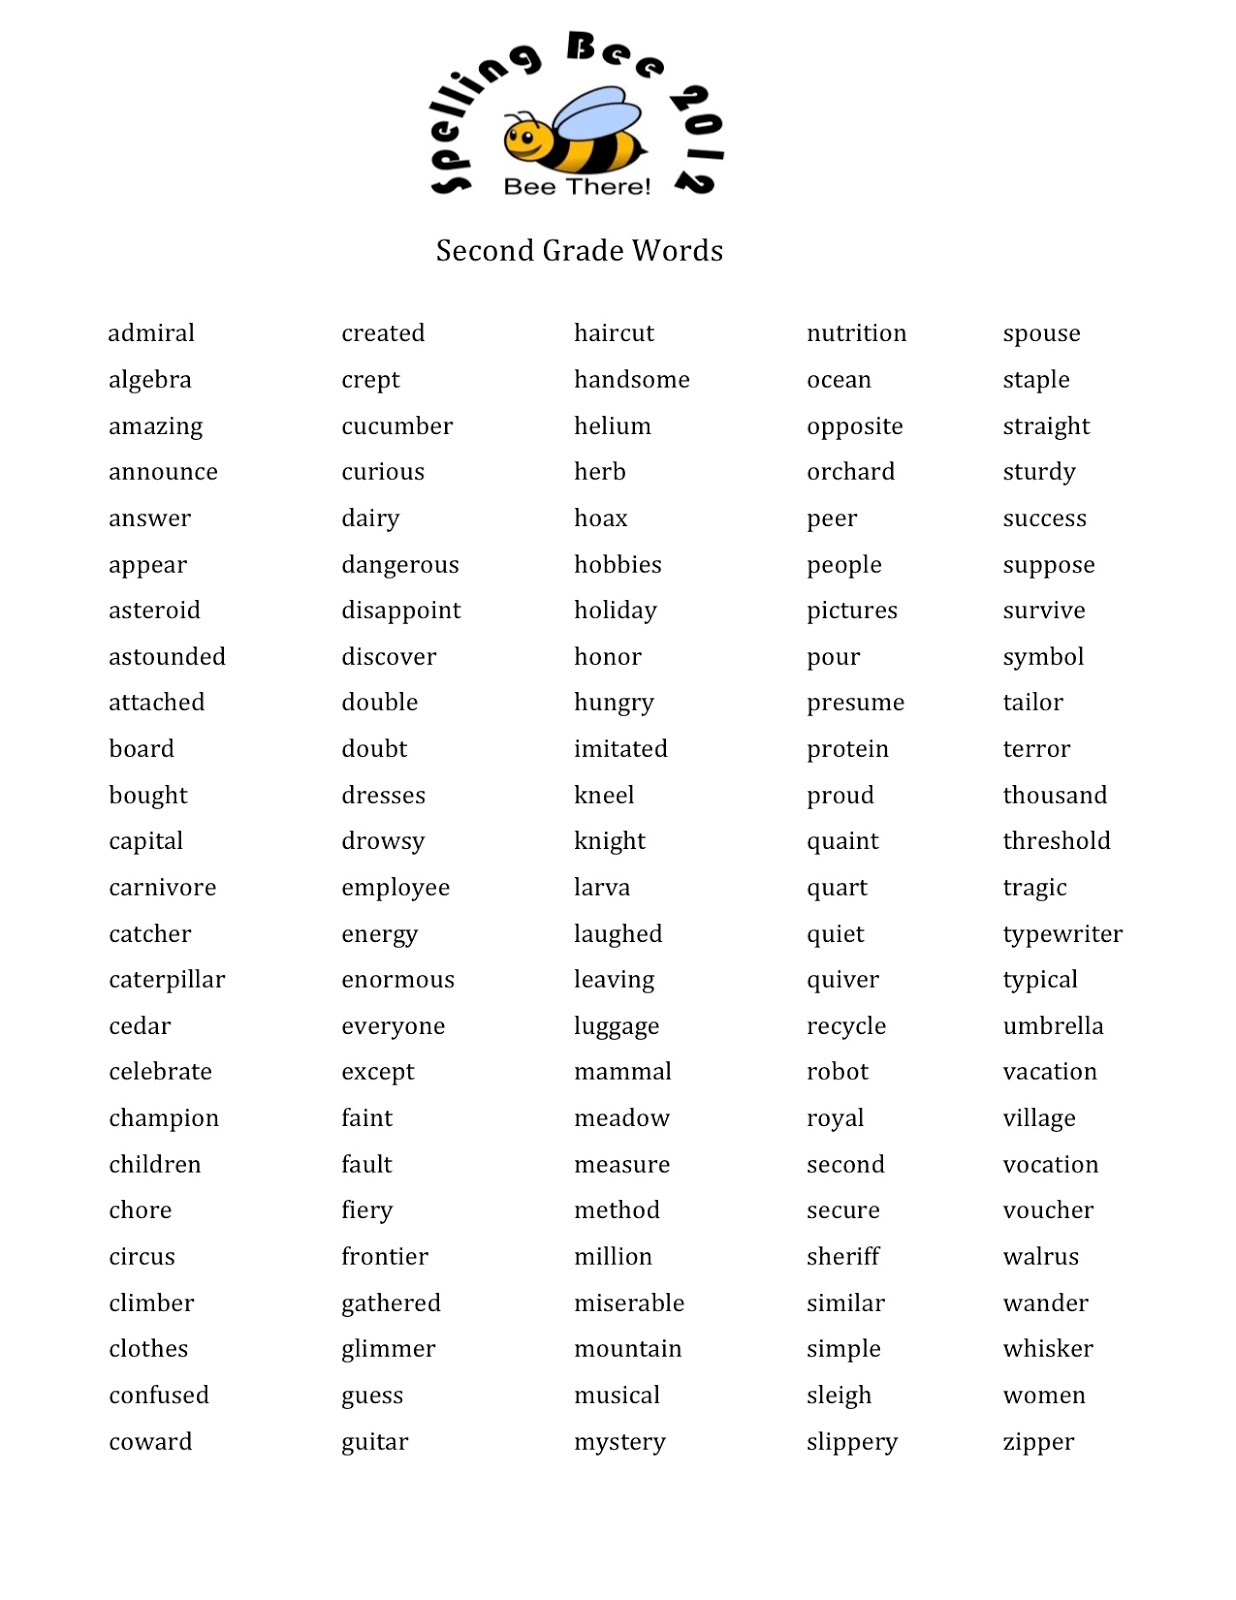 2nd Grade Spelling Bee Word List Image